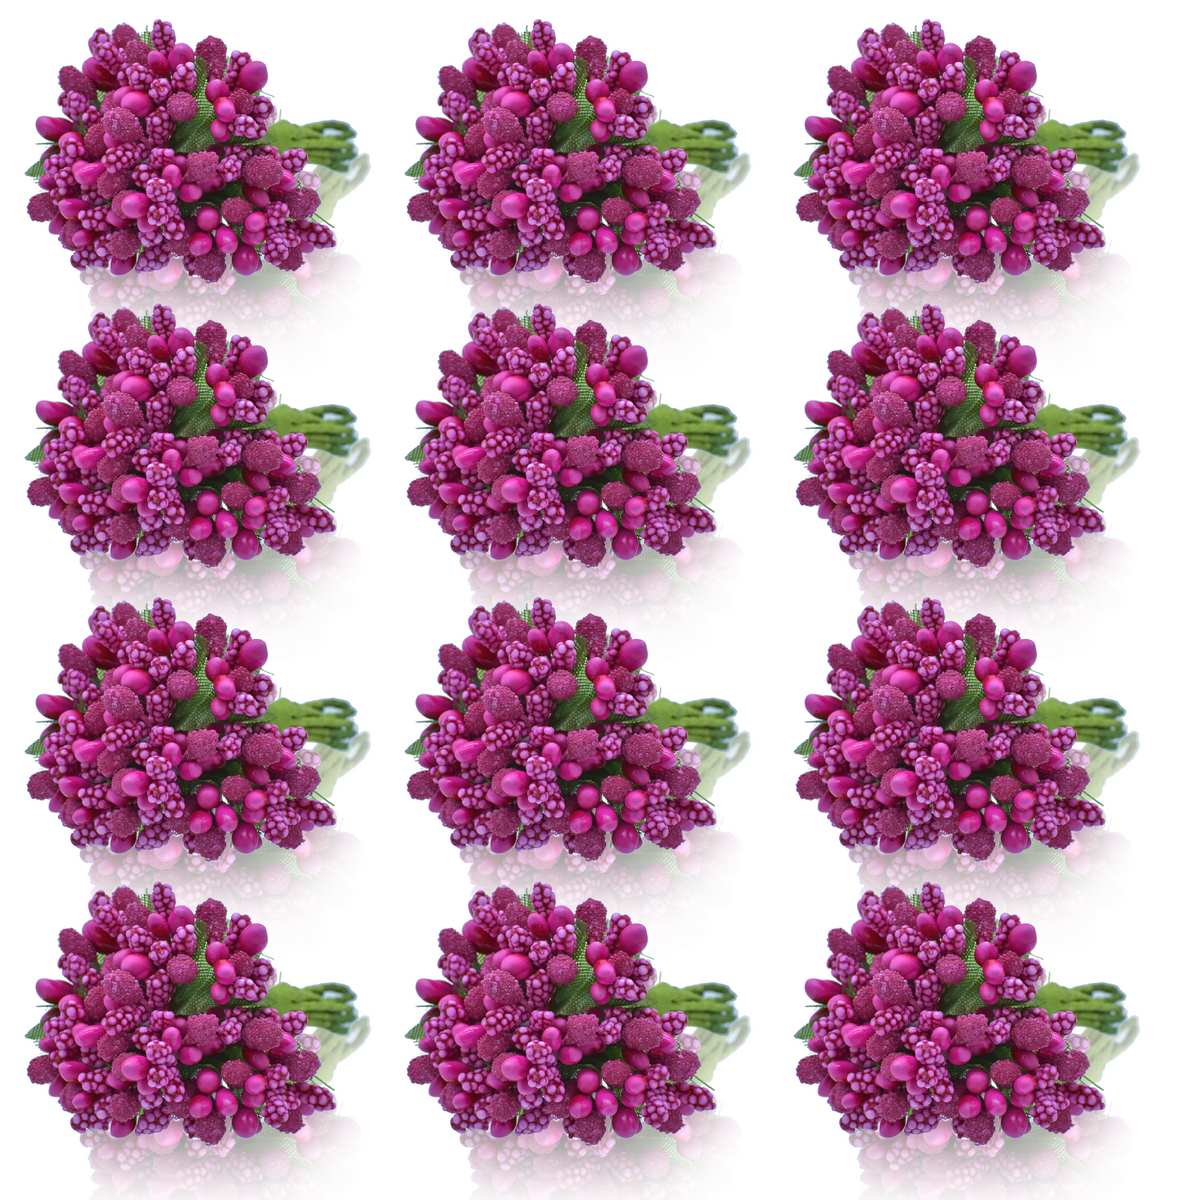 jags-mumbai Artificial Flowers Artificial Flower Polons(Pink color)